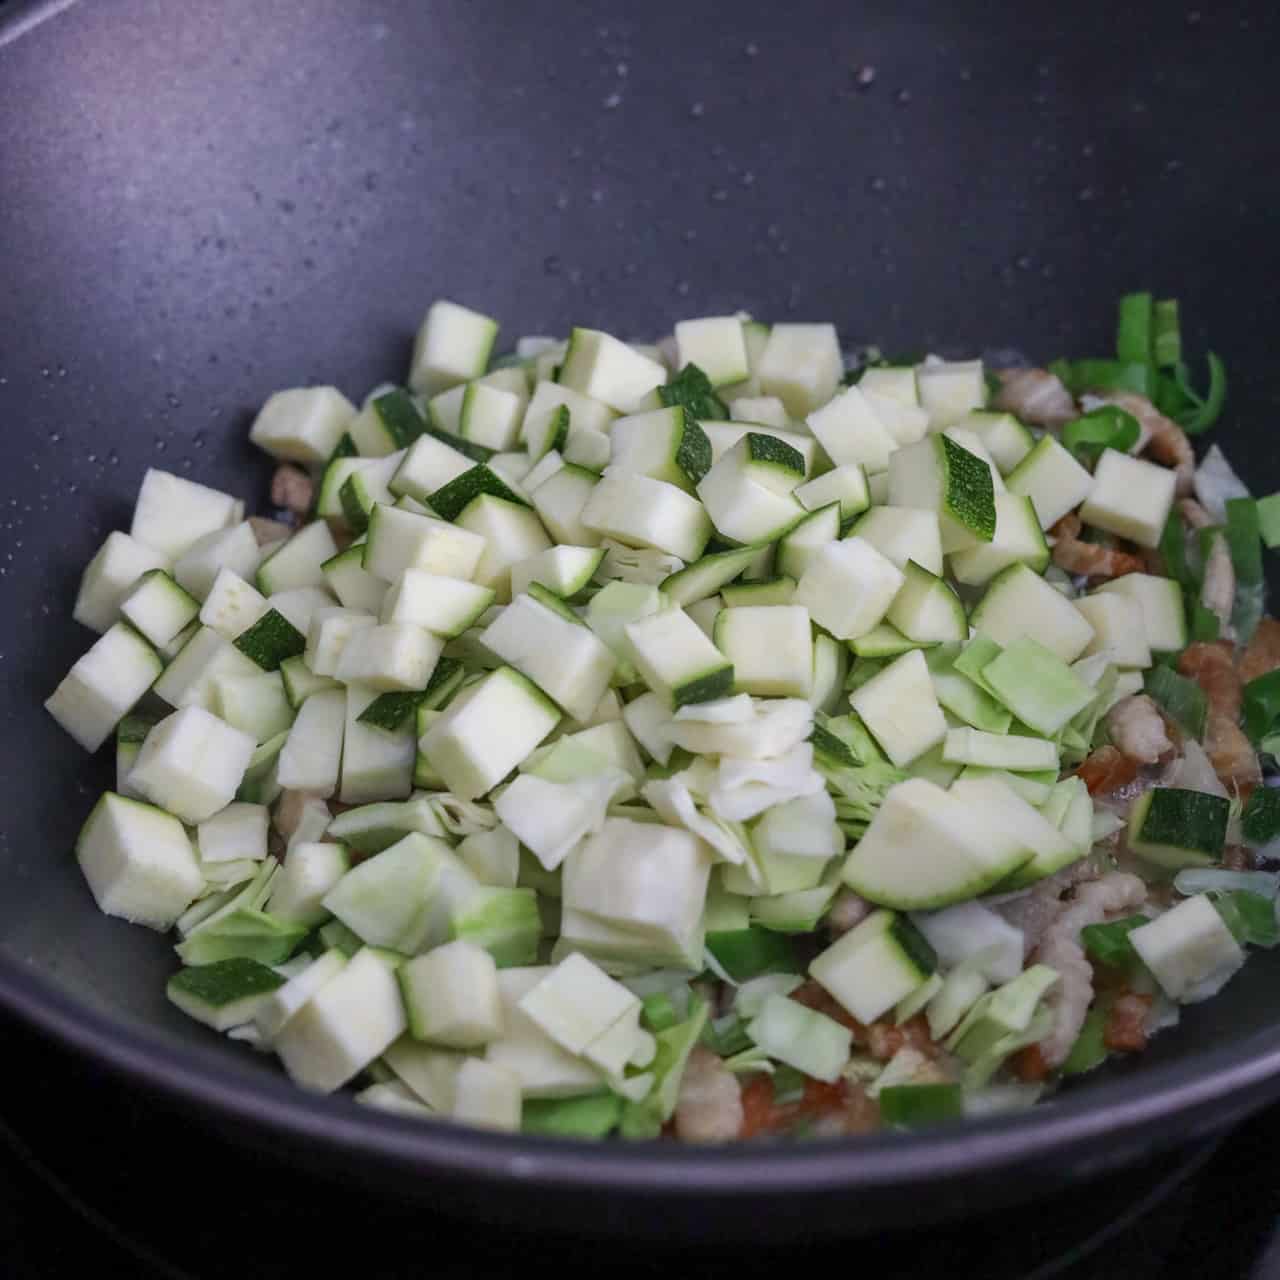 Cook aromatics & vegetables